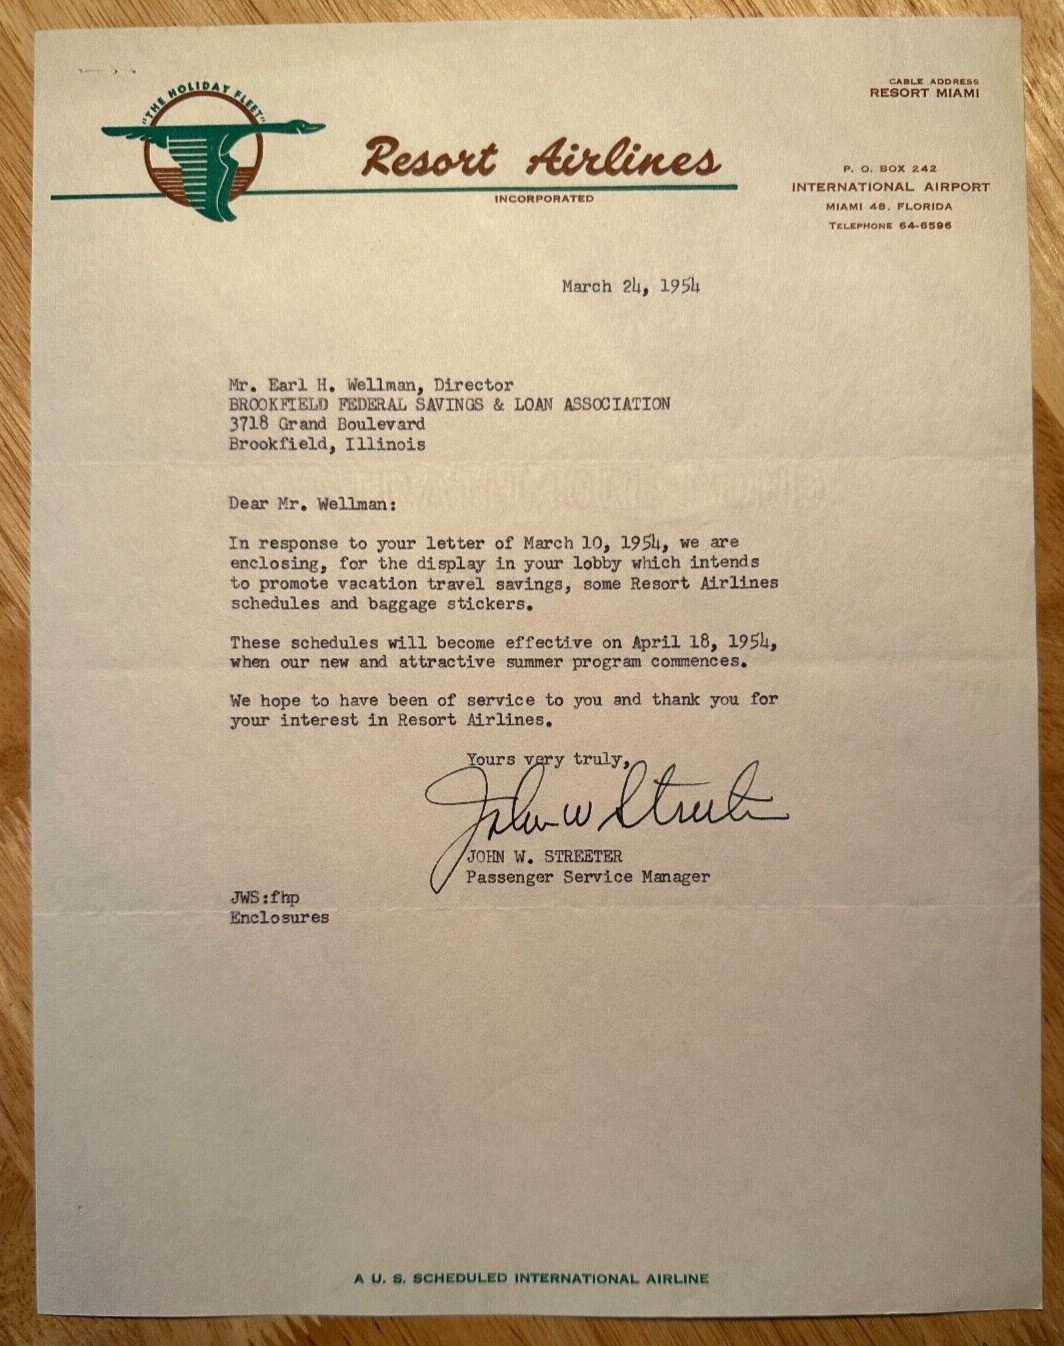 Resort Airlines- 1954 Miami, Florida vintage business letter